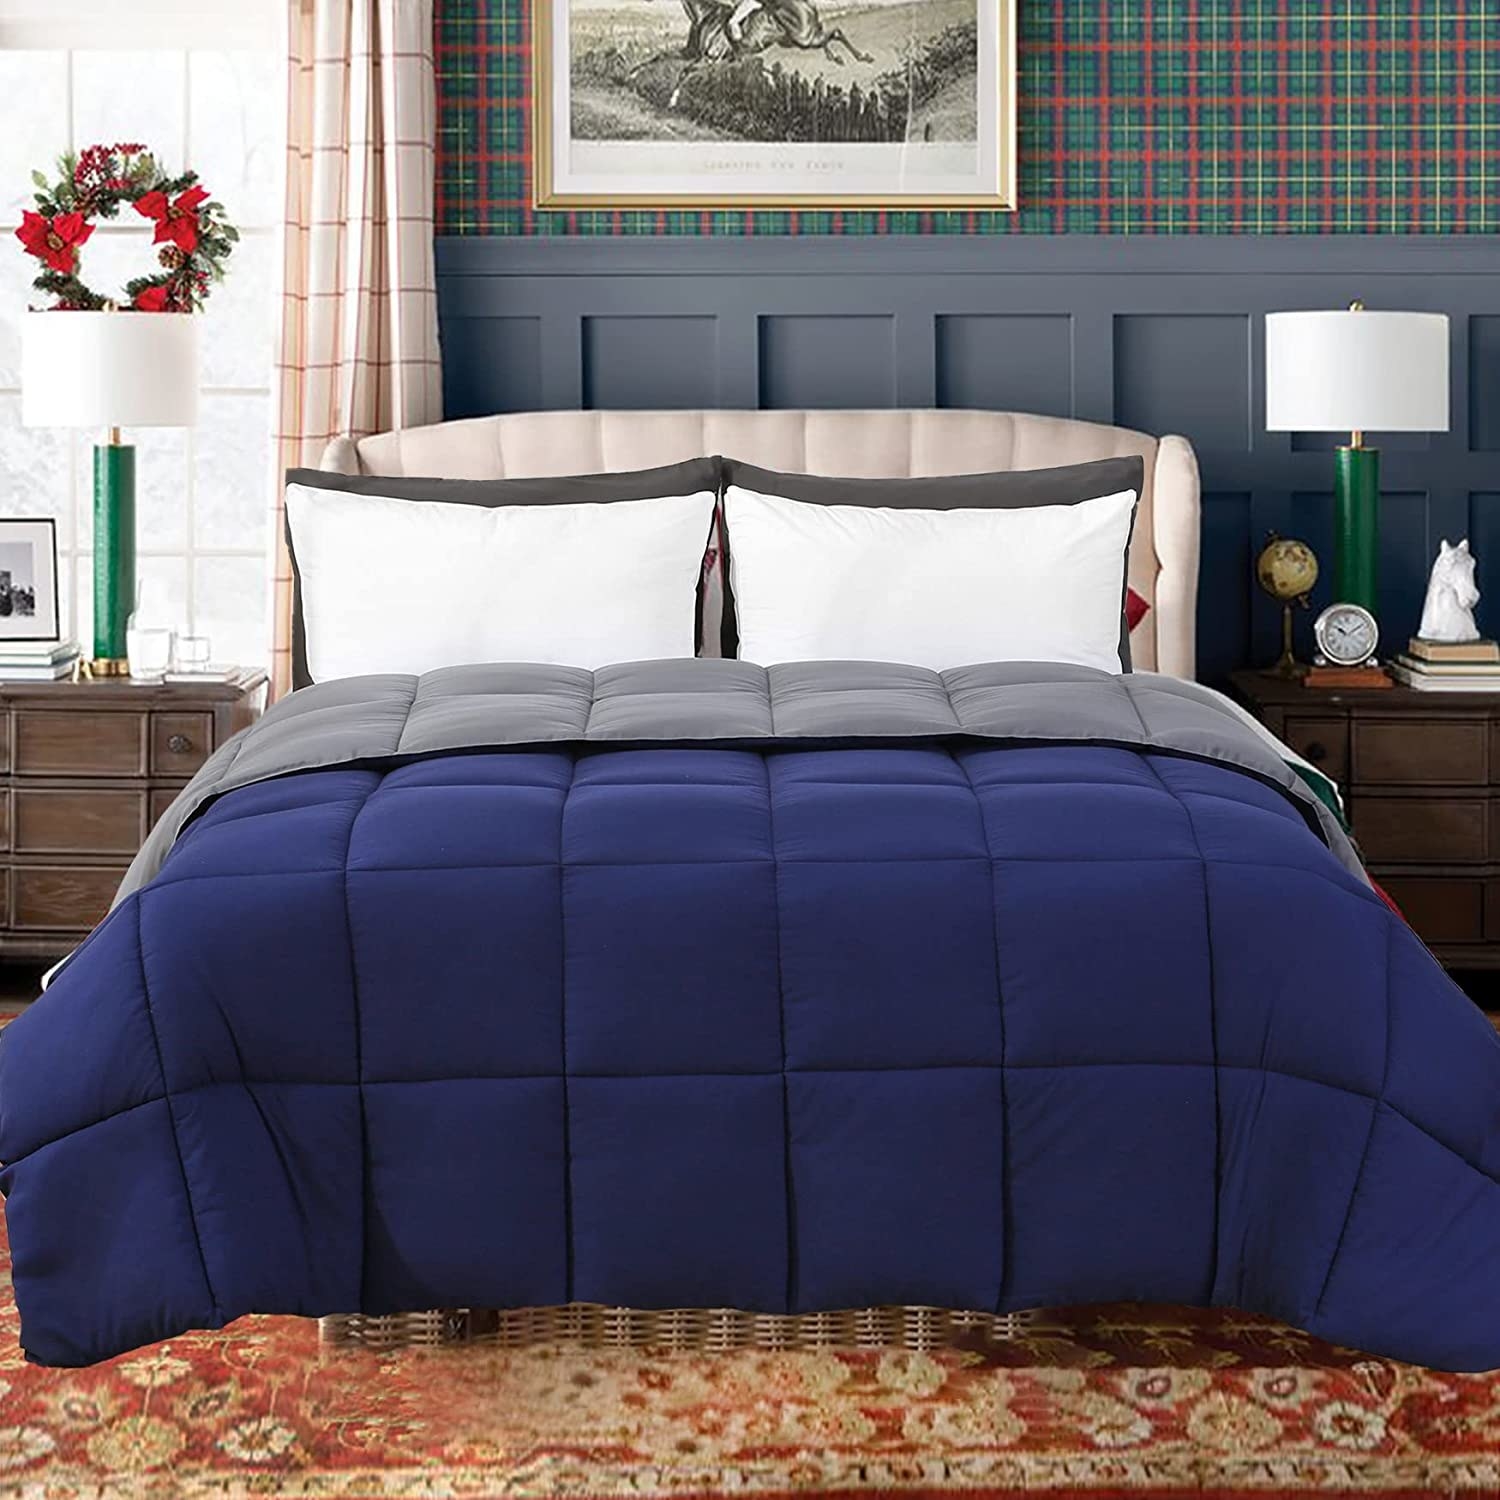 navy and gray reversible comforter on mattress in bedroom